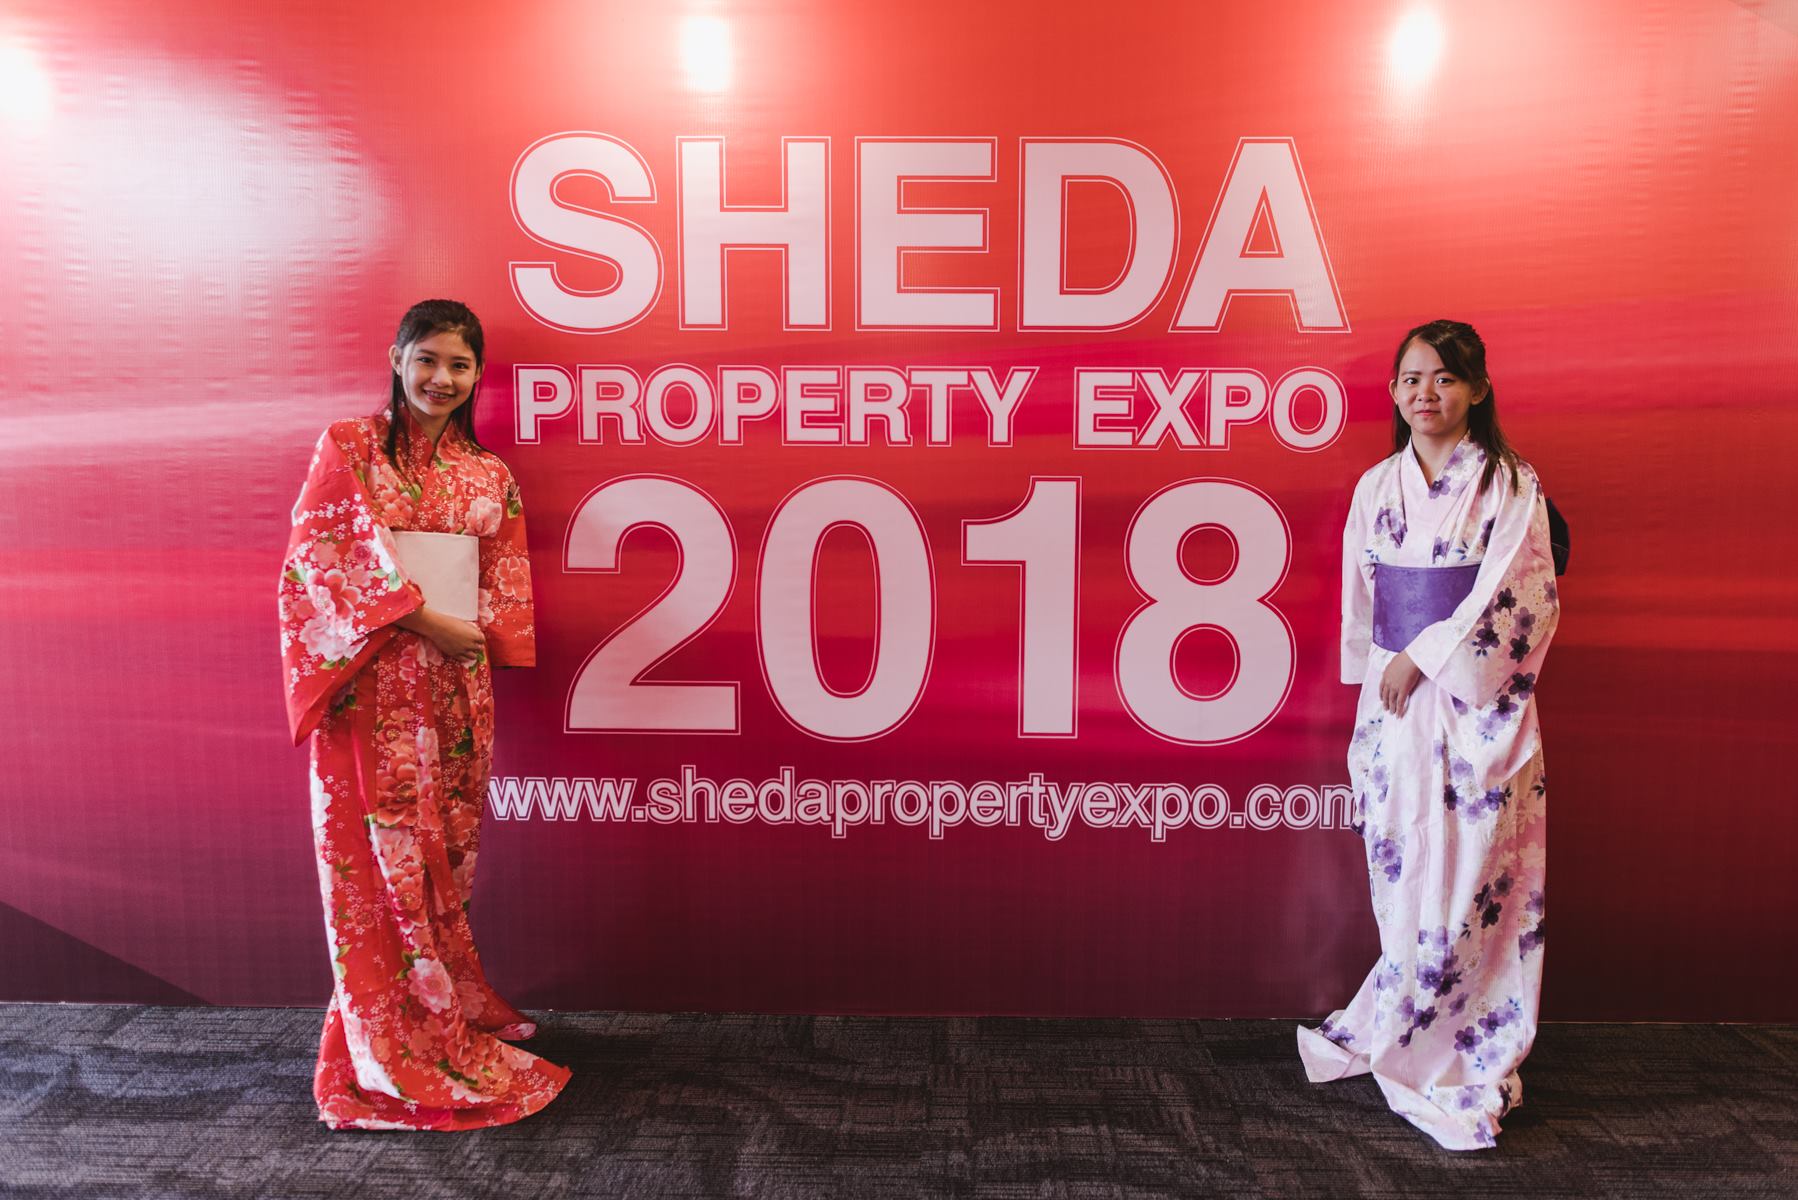 Sheda Property Expo